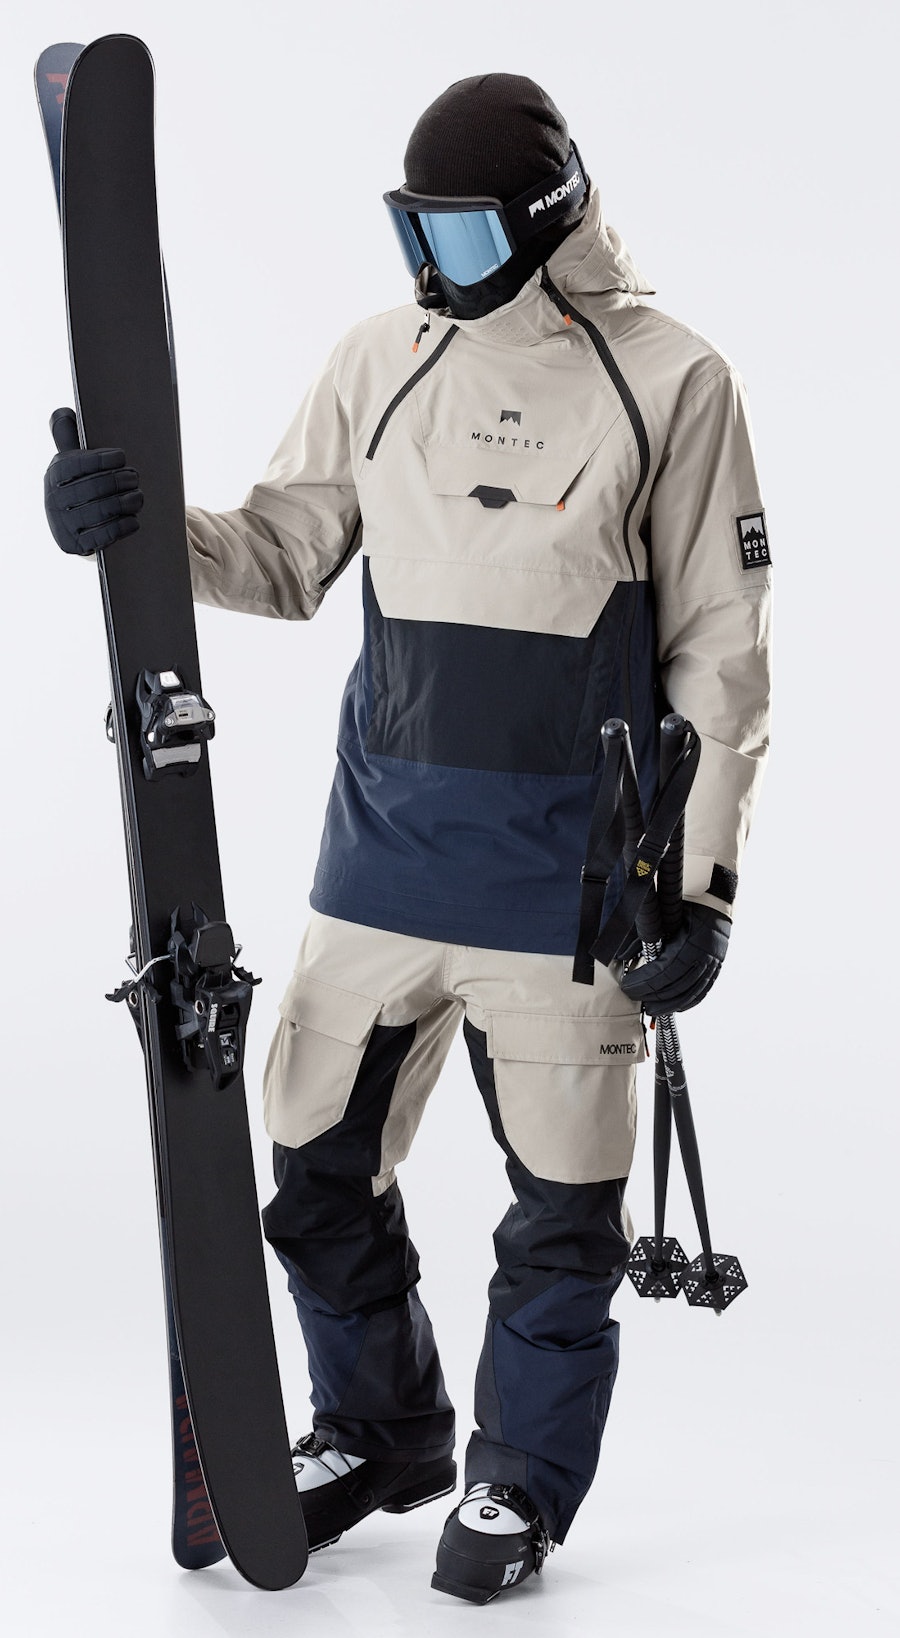 Ski clothing makes